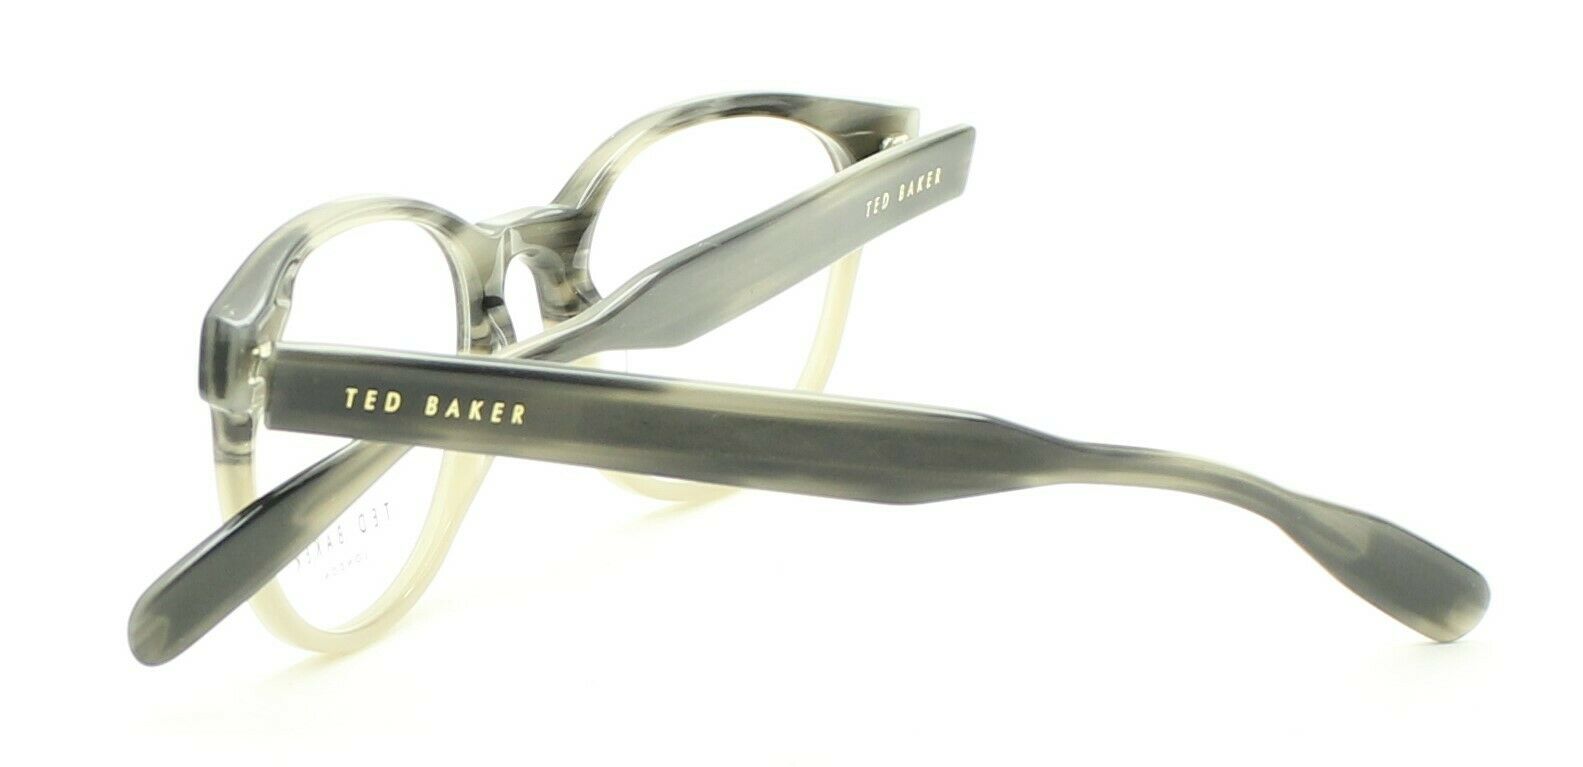 TED BAKER Cade 8197 960 51mm Eyewear FRAMES Glasses Eyeglasses RX Optical - New